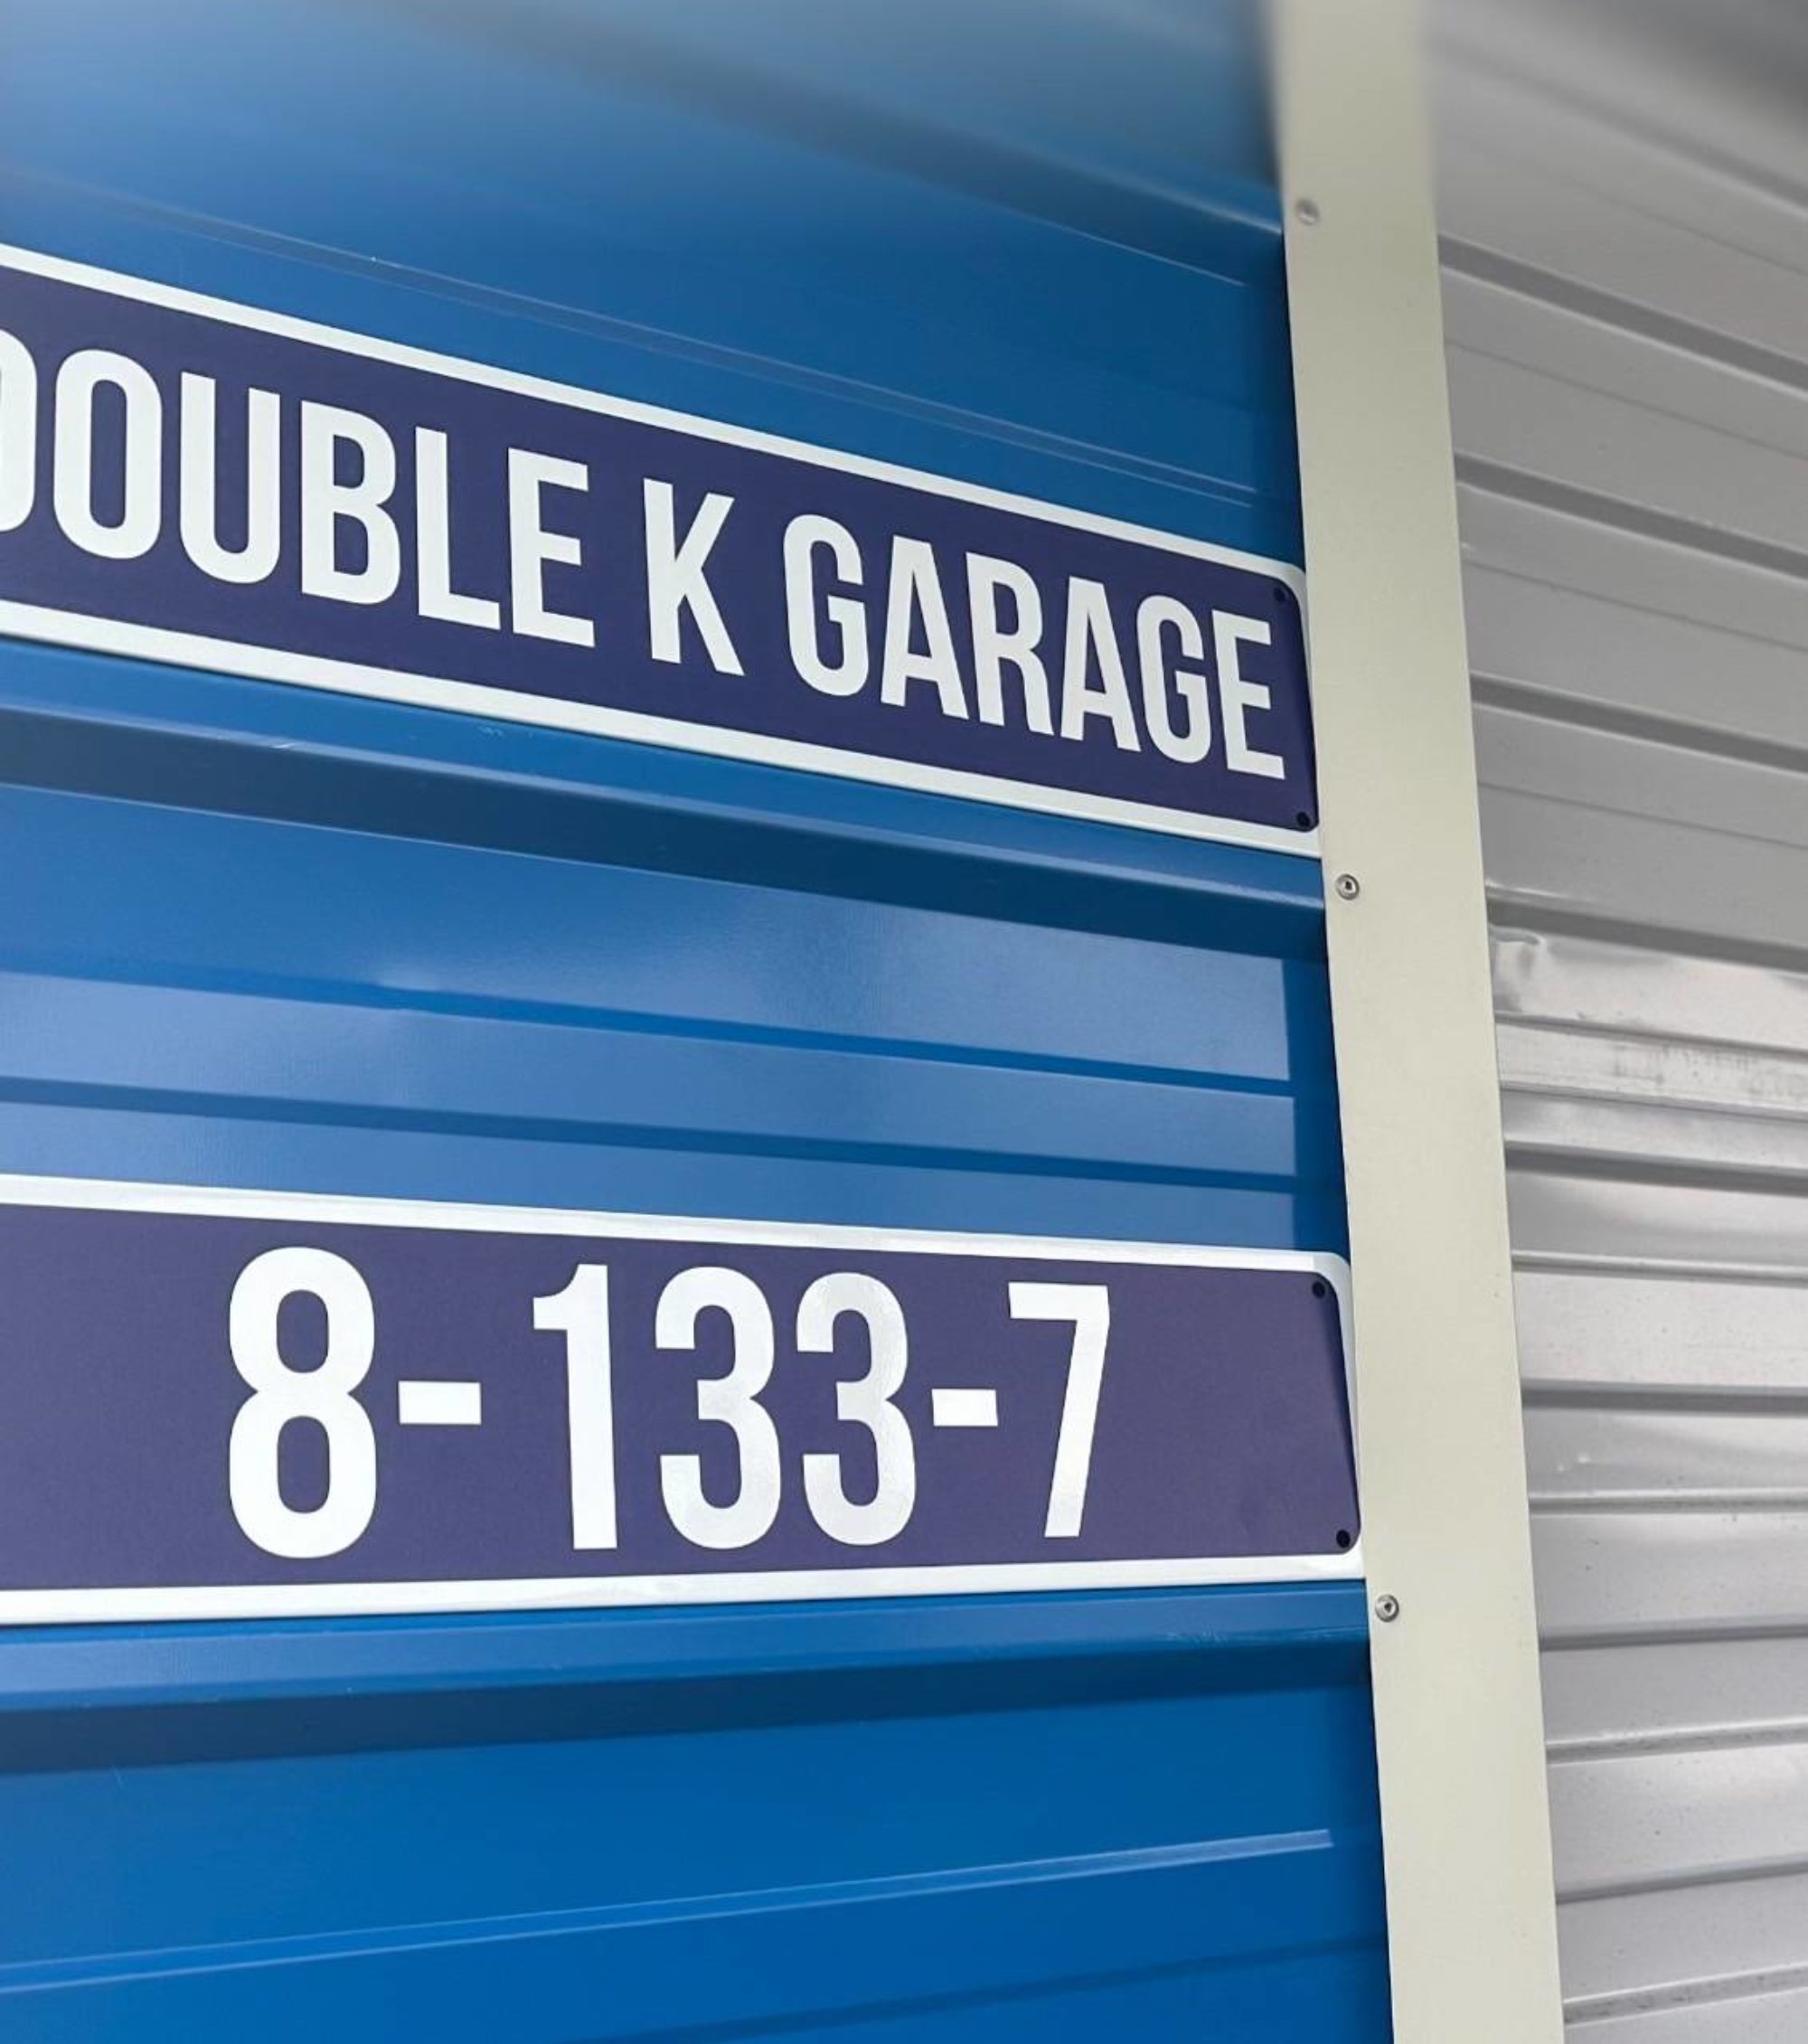 Double K garage